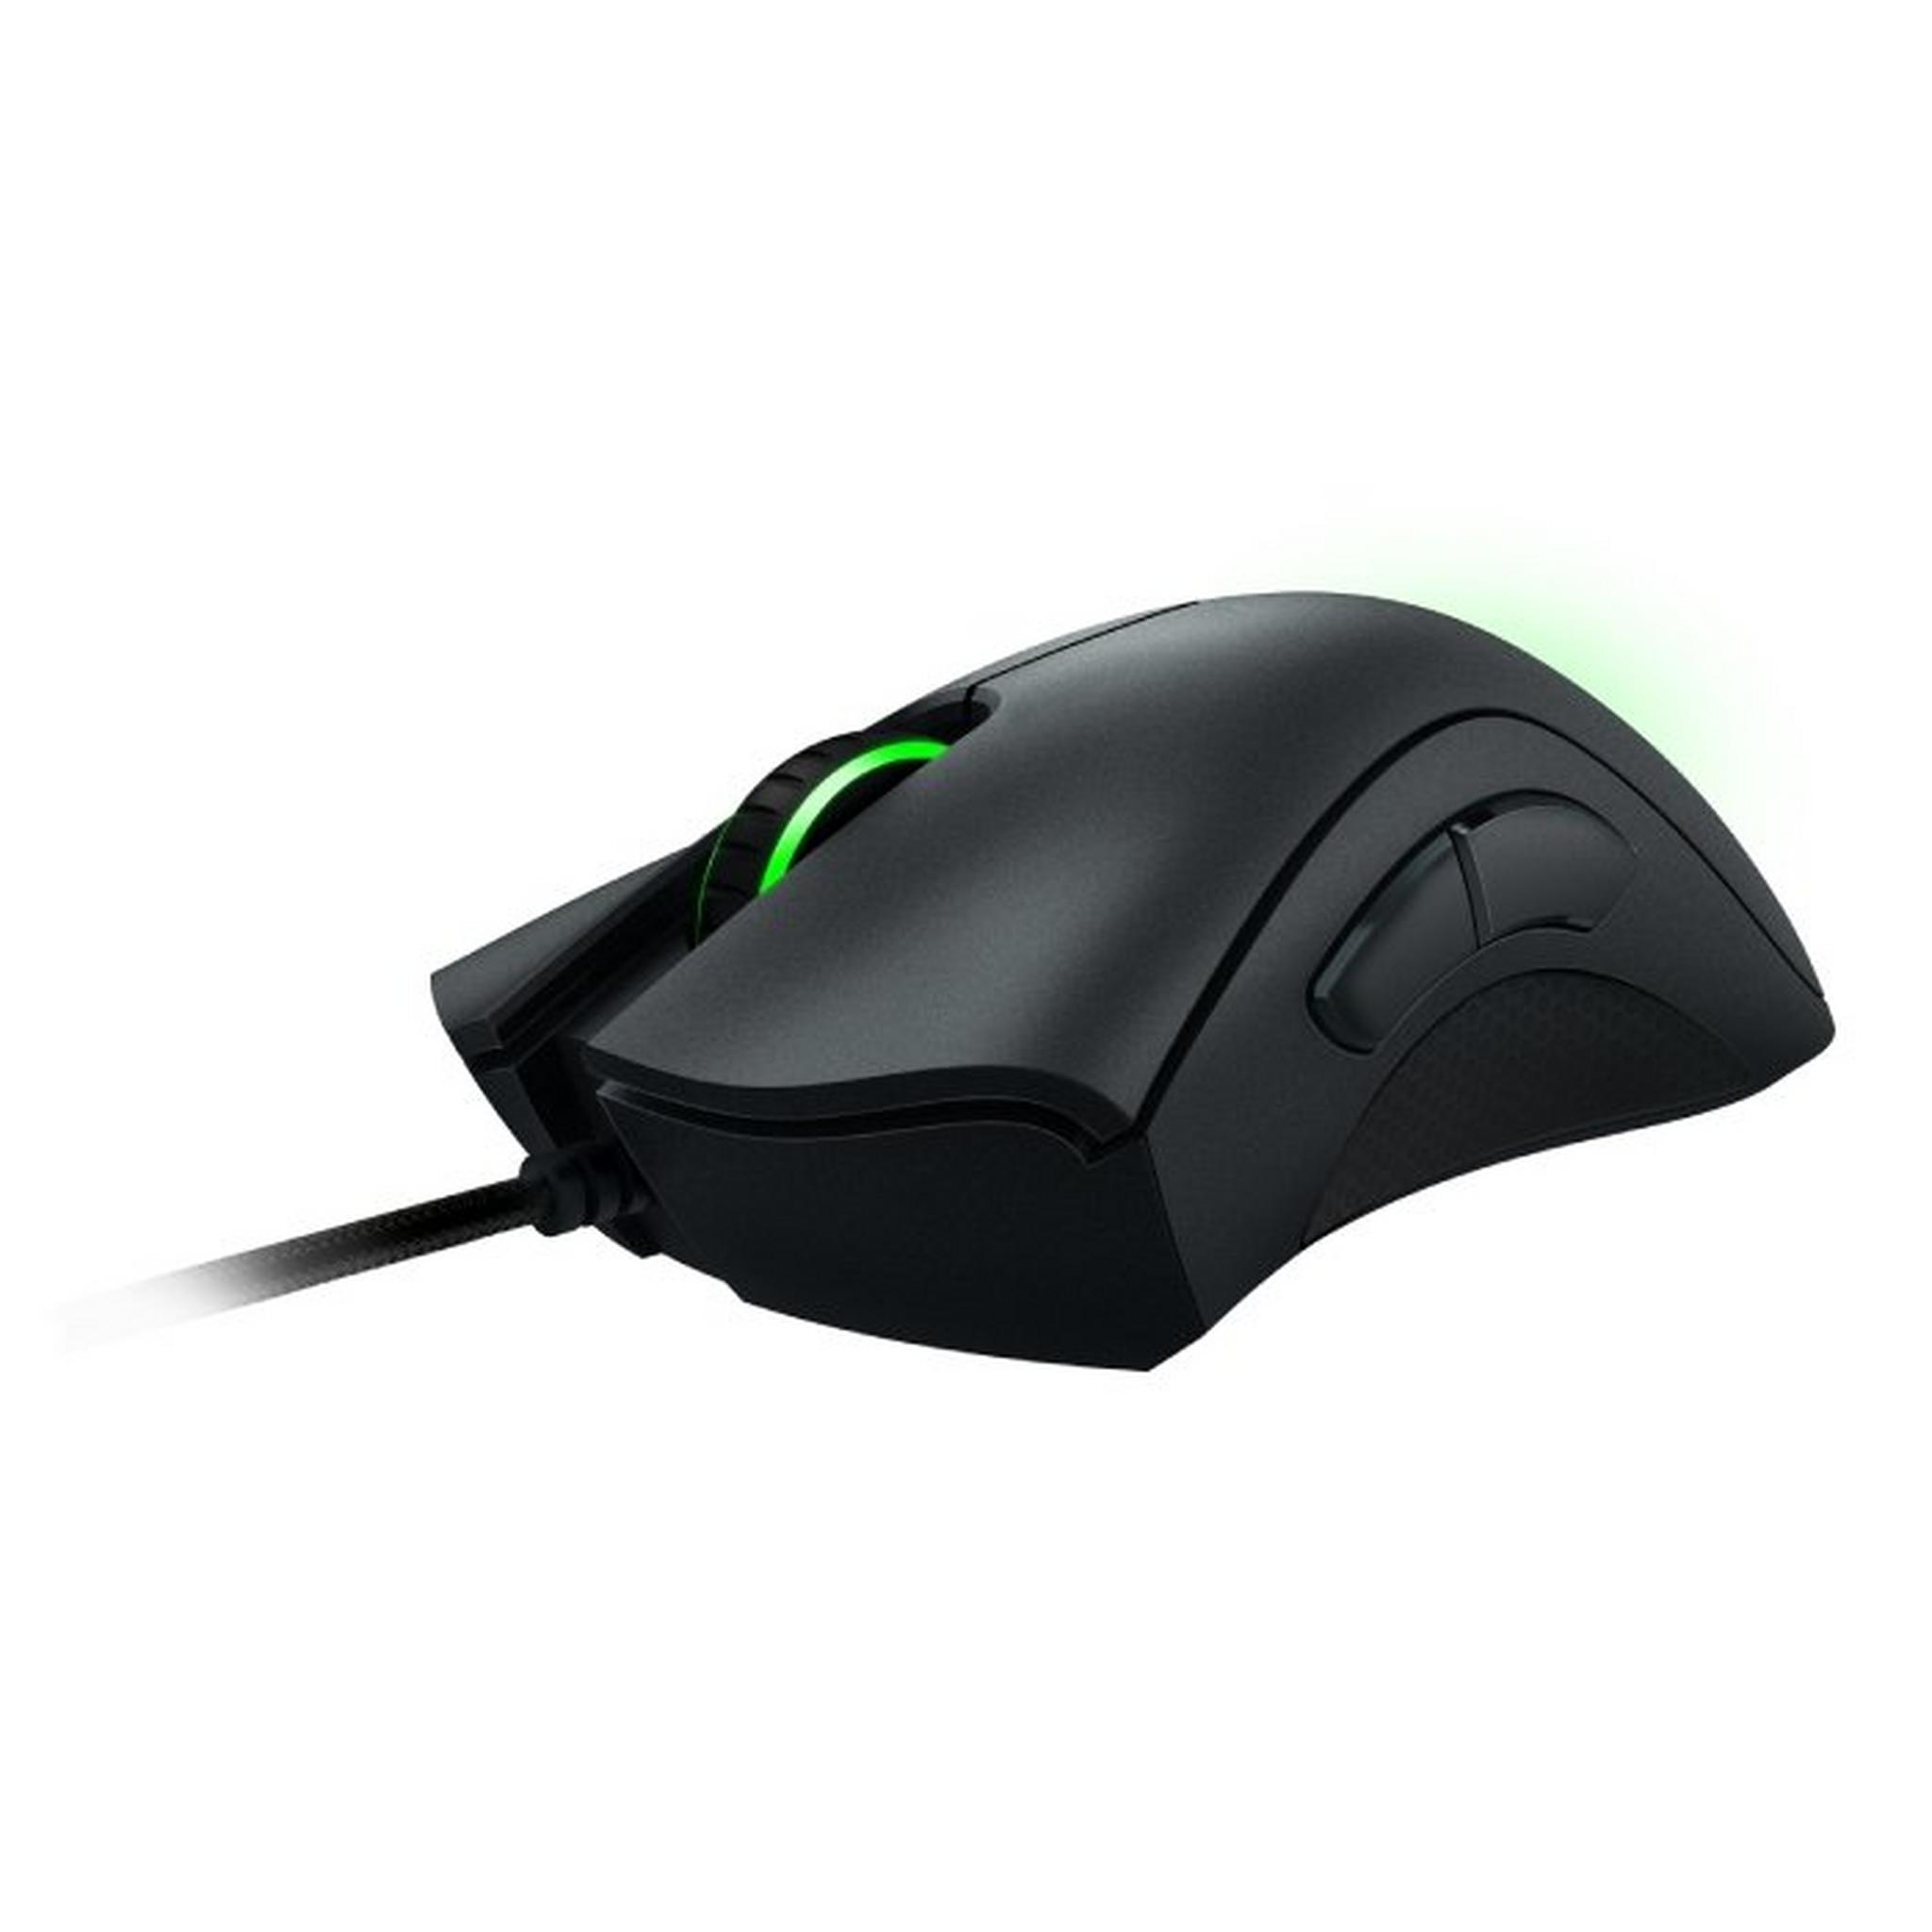 Razer DeathAdder Essential Edition Gaming Mouse- Black